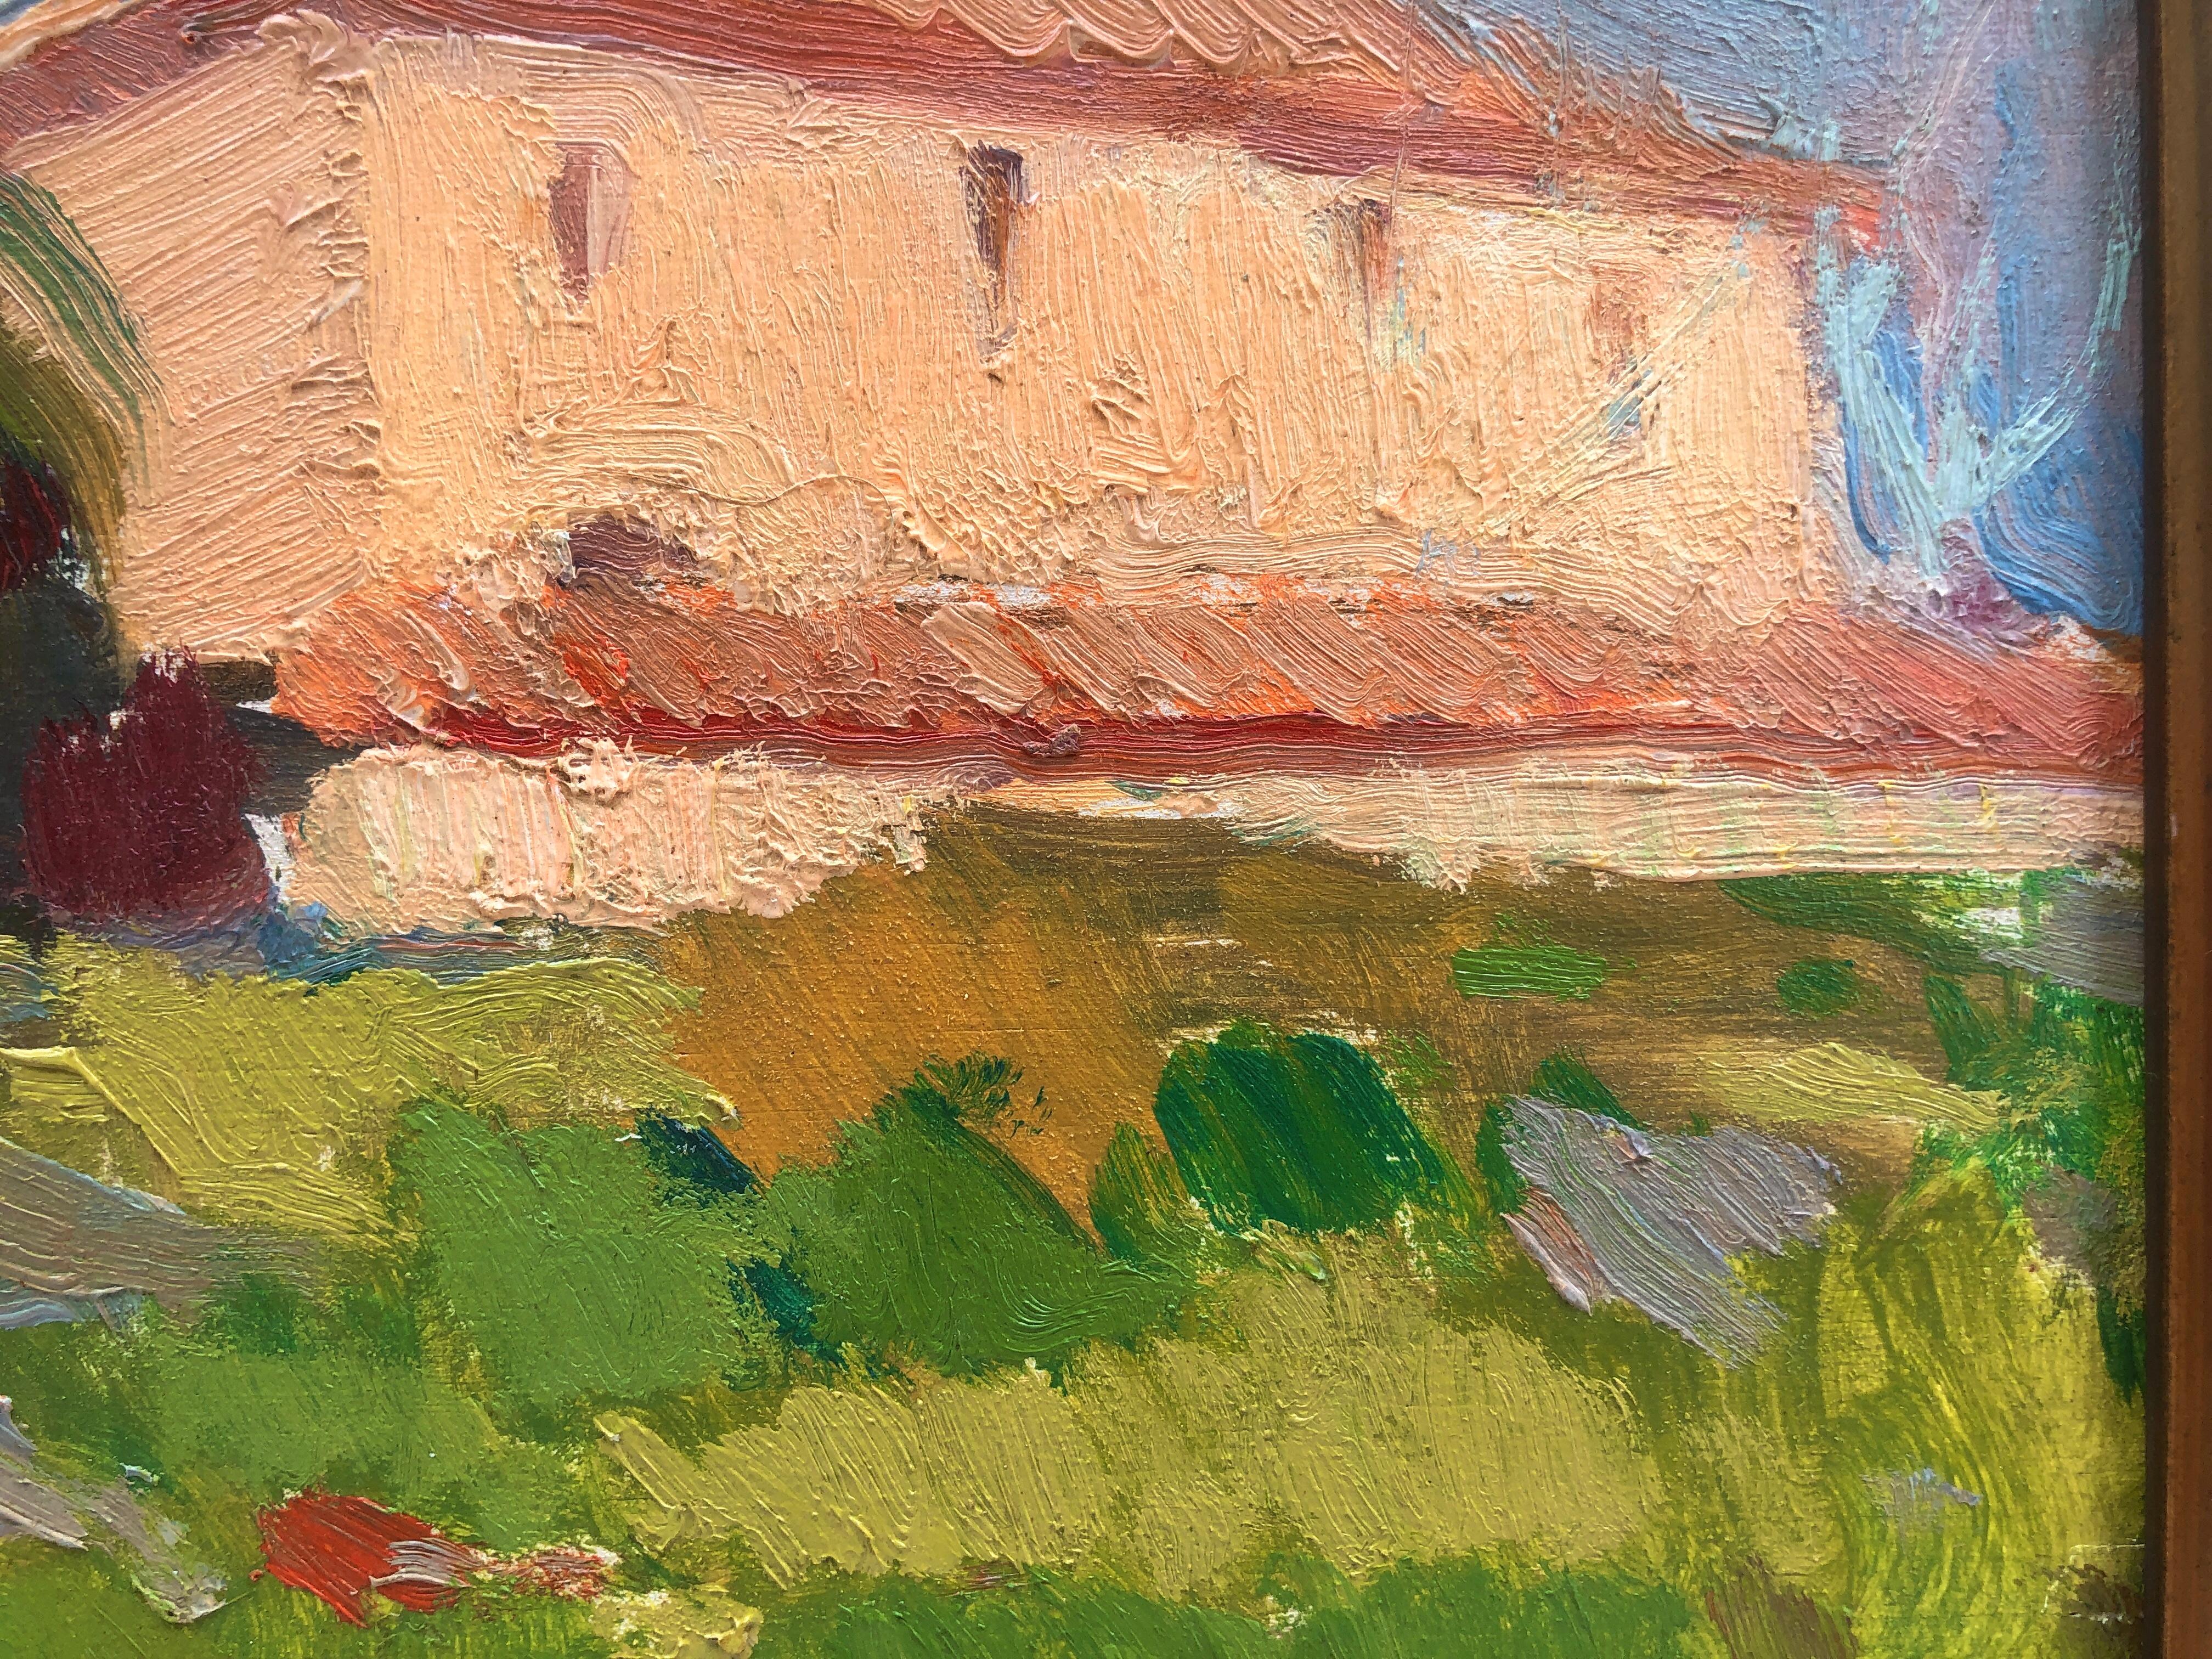 Antonio Sala Herrero (1927-2012) - farmhouse - Oil on panel.
Oil measures 19x24 cm.
Frame measures 29x34 cm.